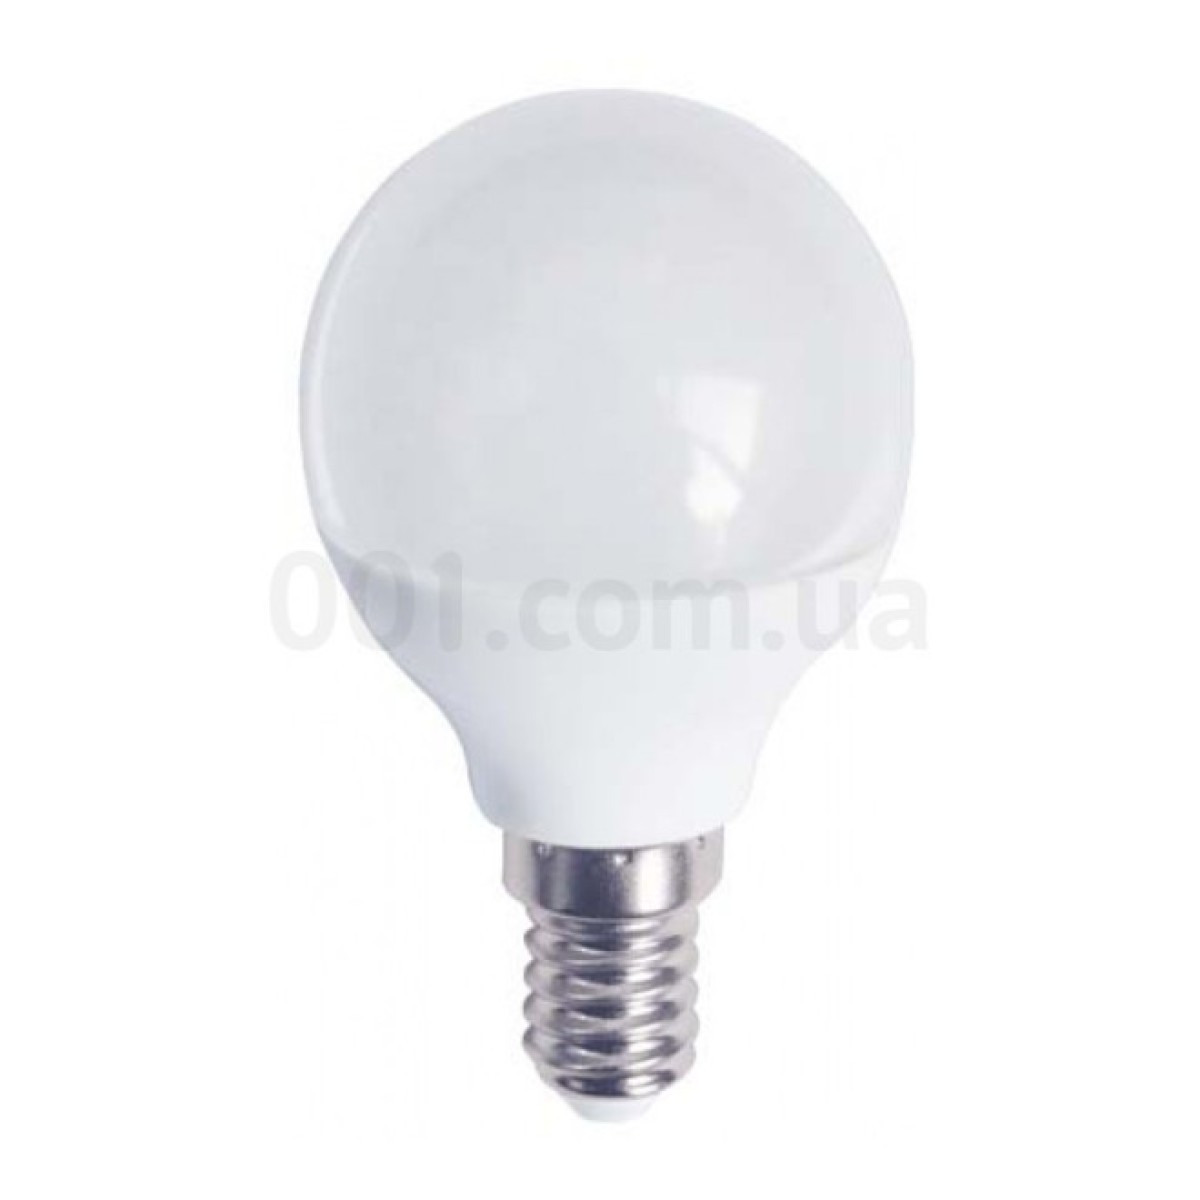 Светодиодная лампа LB-745 P45 (шар) 6Вт 6400K E14, Feron 256_256.jpg